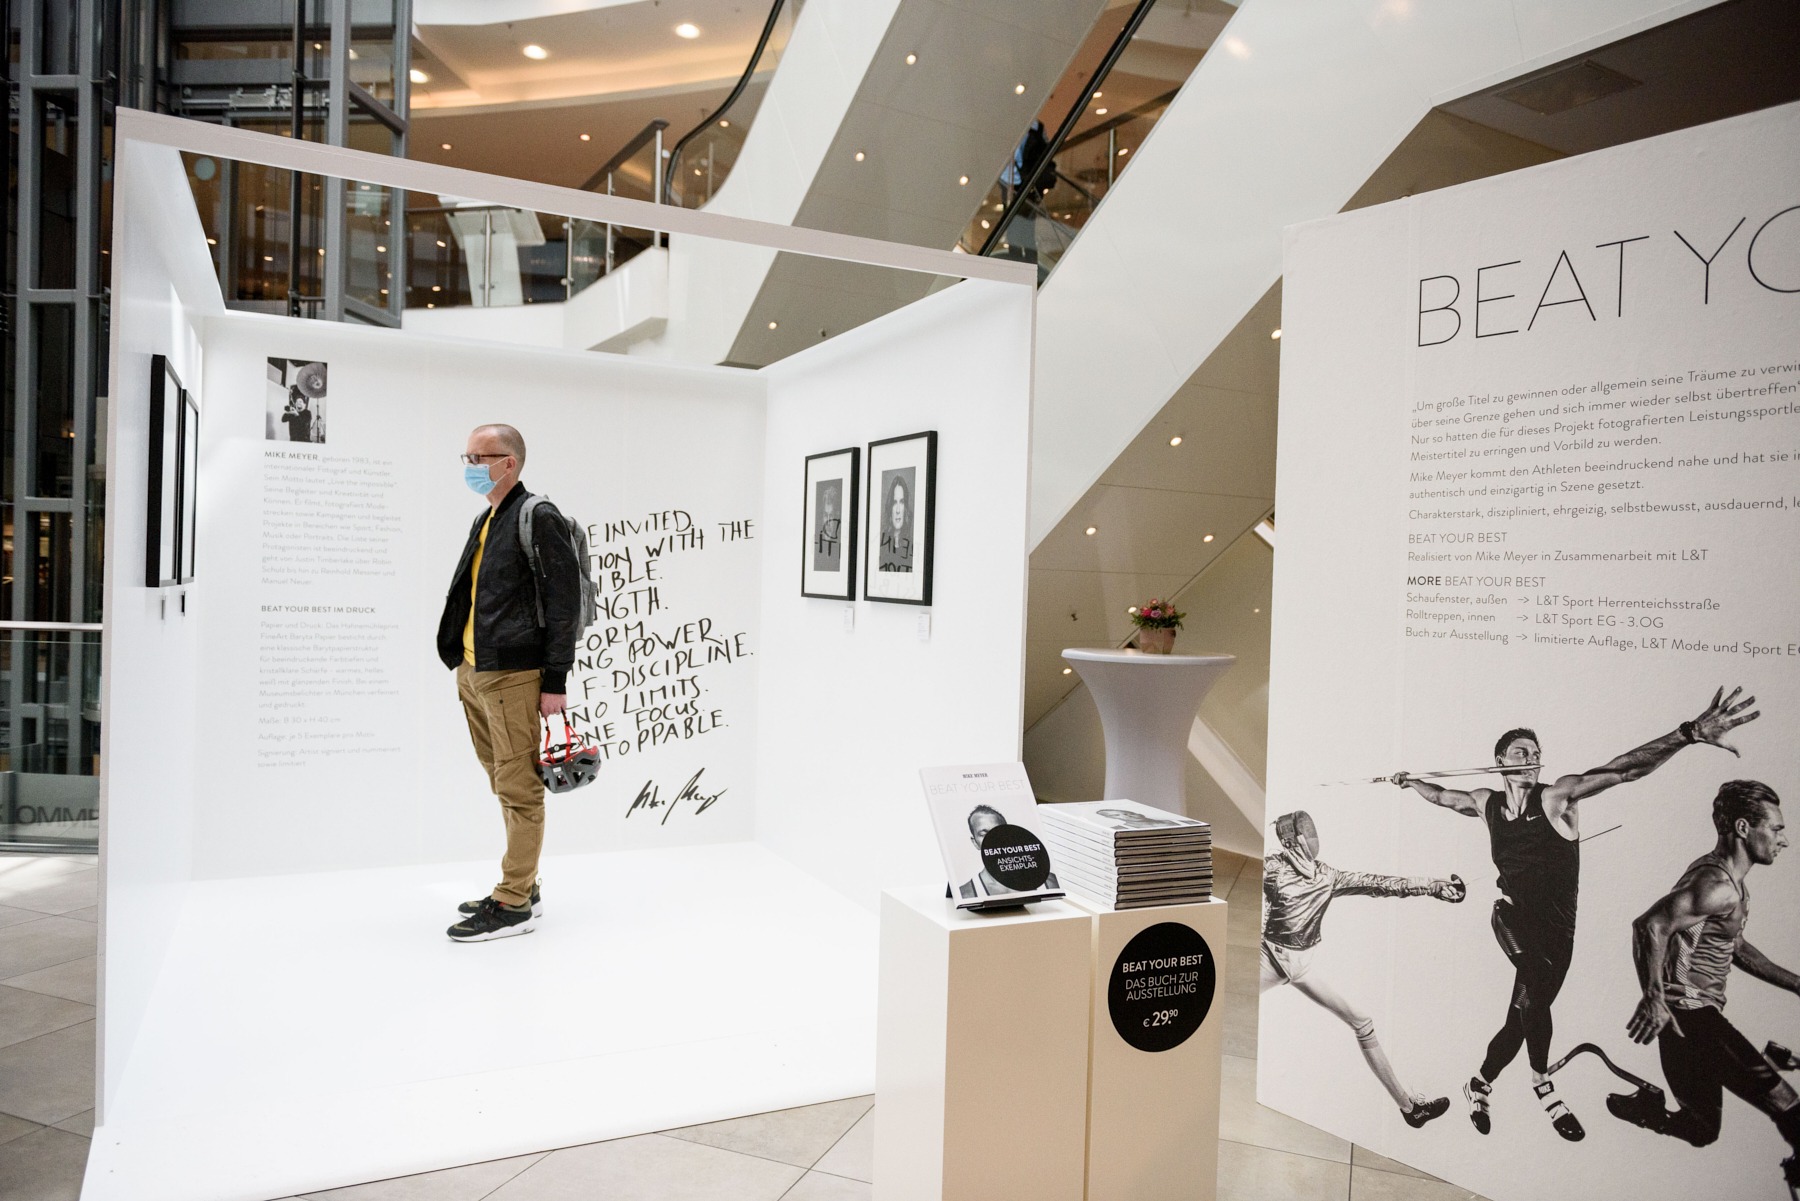 beat your best exhibition opening & art installation   lengermann und trieschmann osnabrück by Mike Meyer Photography